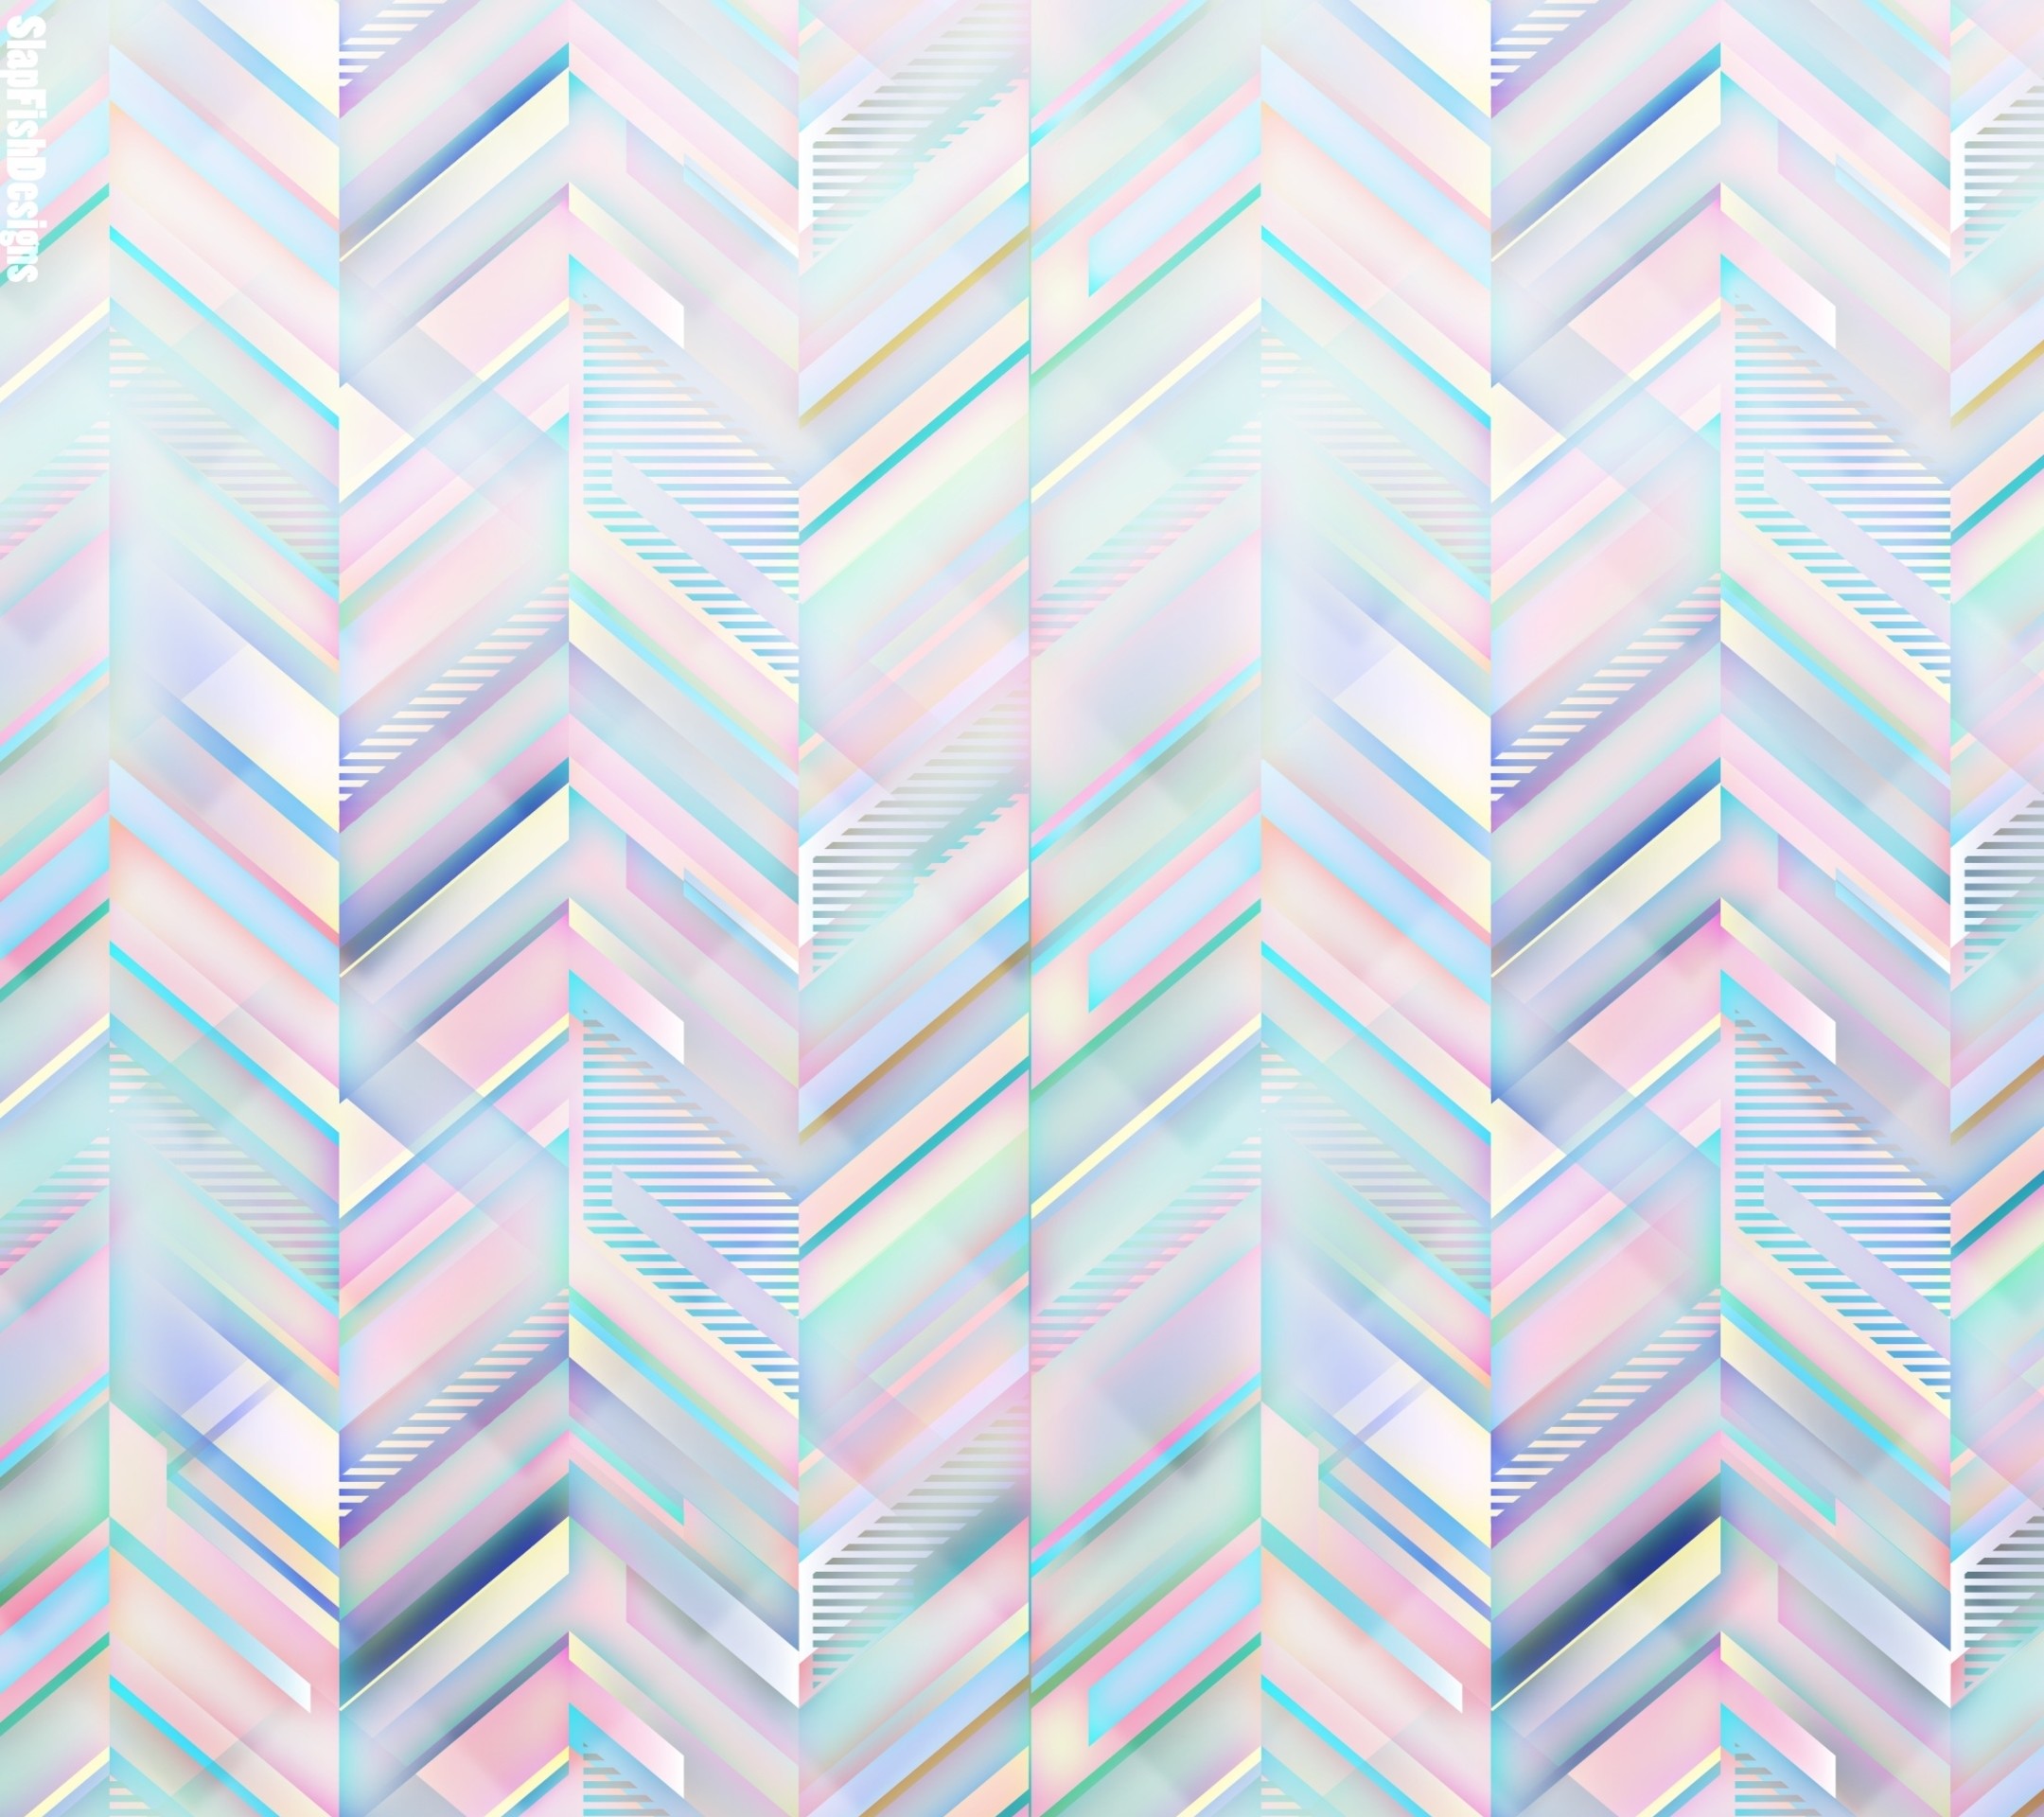 2160x1920 wallpaper tumblr patterns | Pattern Wallpapers Tumblr -wallpaper-hd -patterns_79-